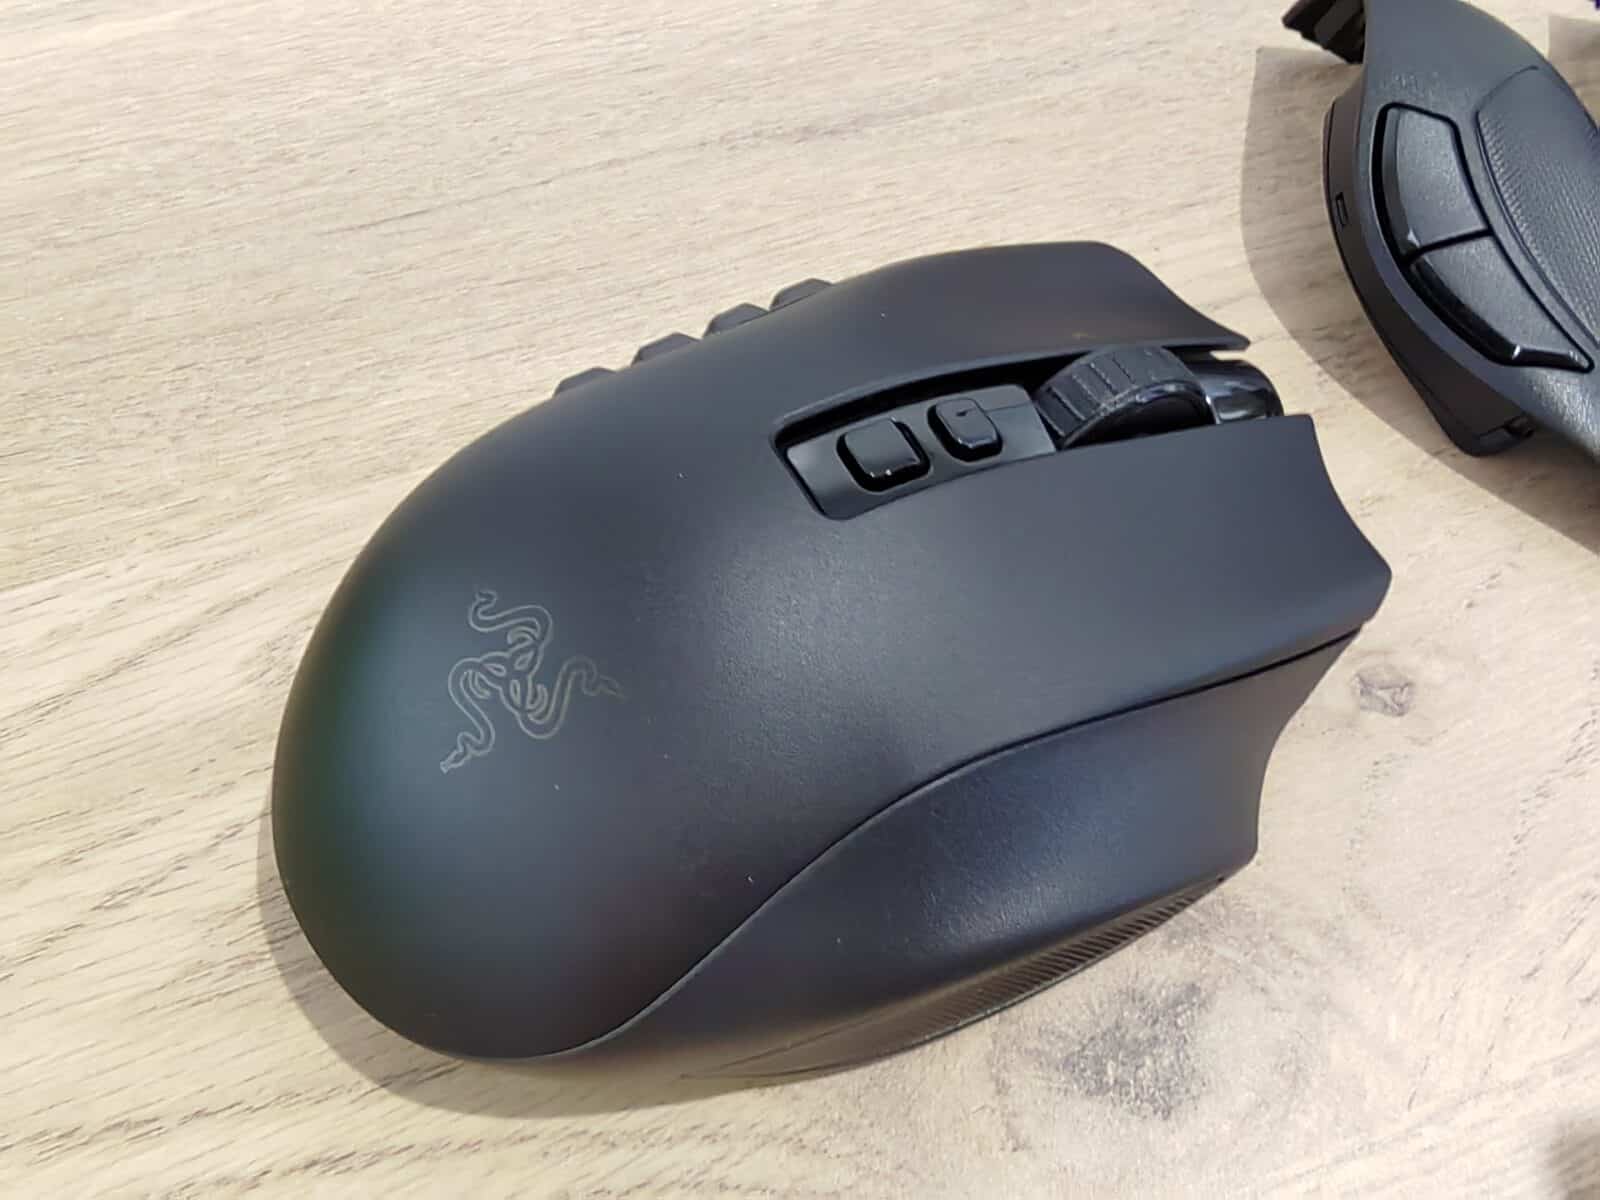 Test – Razer Naga V2 Pro : Une souris sans fil polyvalente gaming